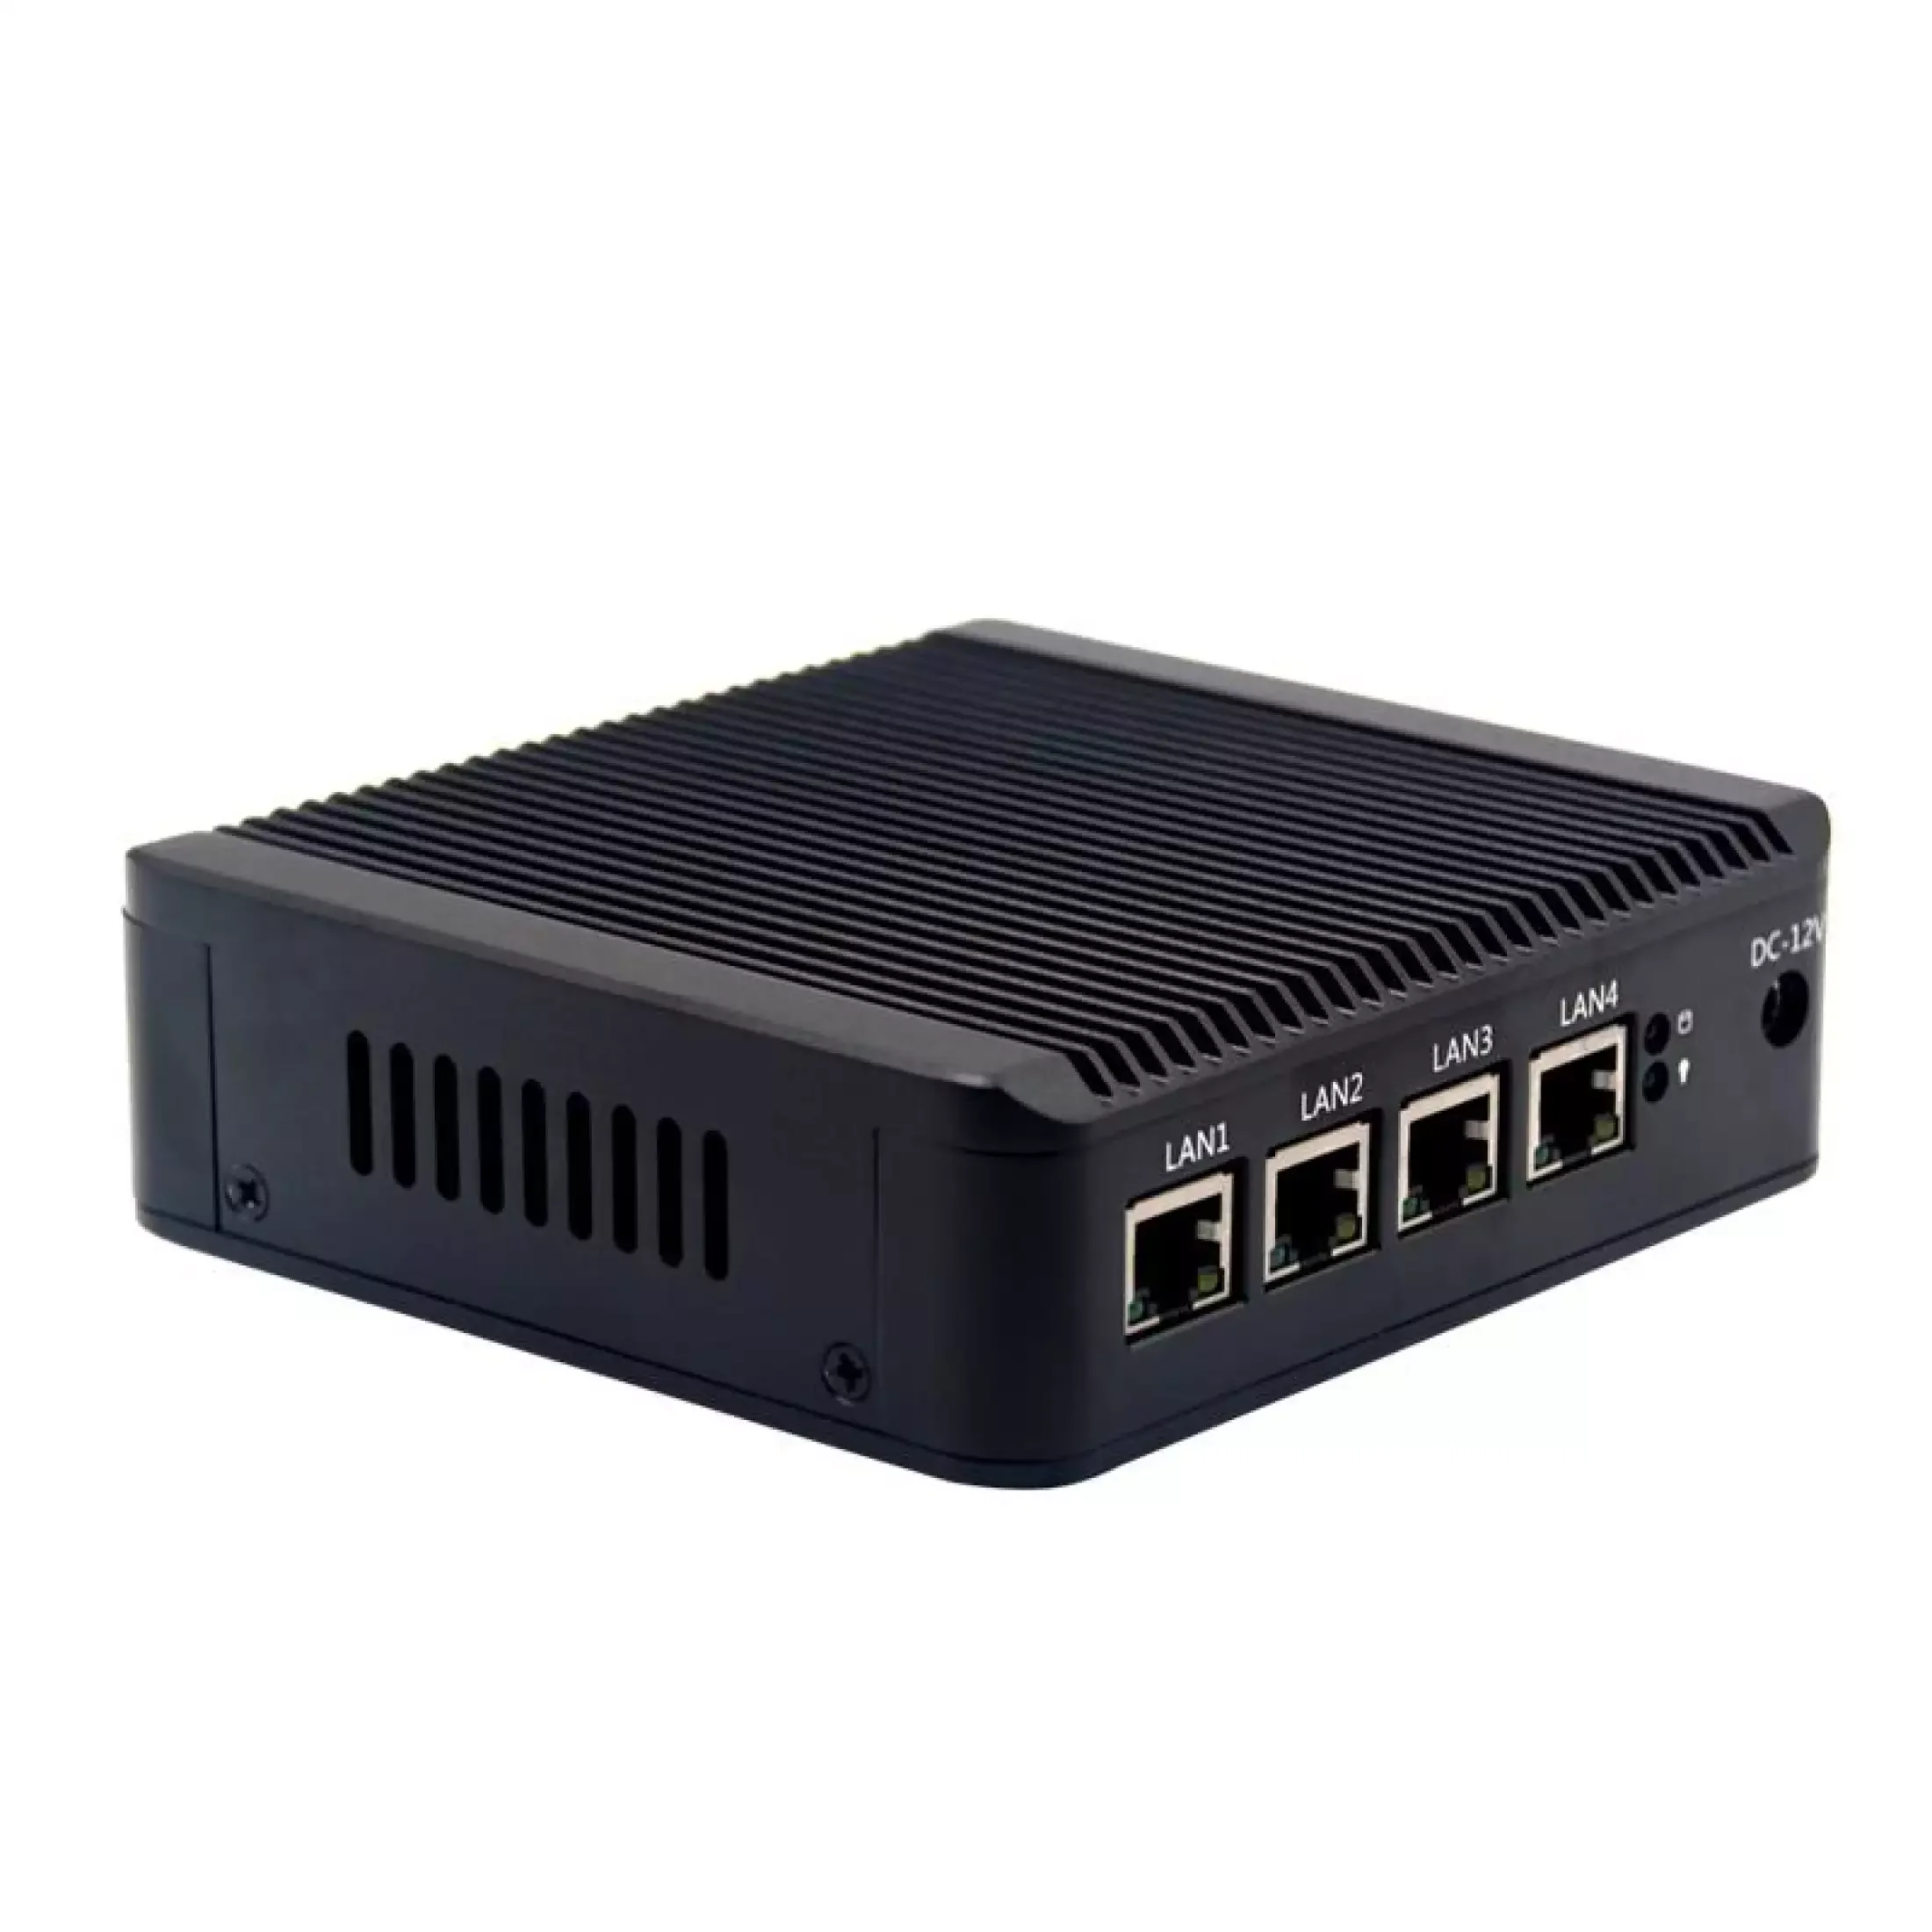 Dual Core N2840 Mini Pfense Router Server Box 4*1000M Lan Wake Up Support Windows10 Win7 HD VGA Dual Display Fanless Computer